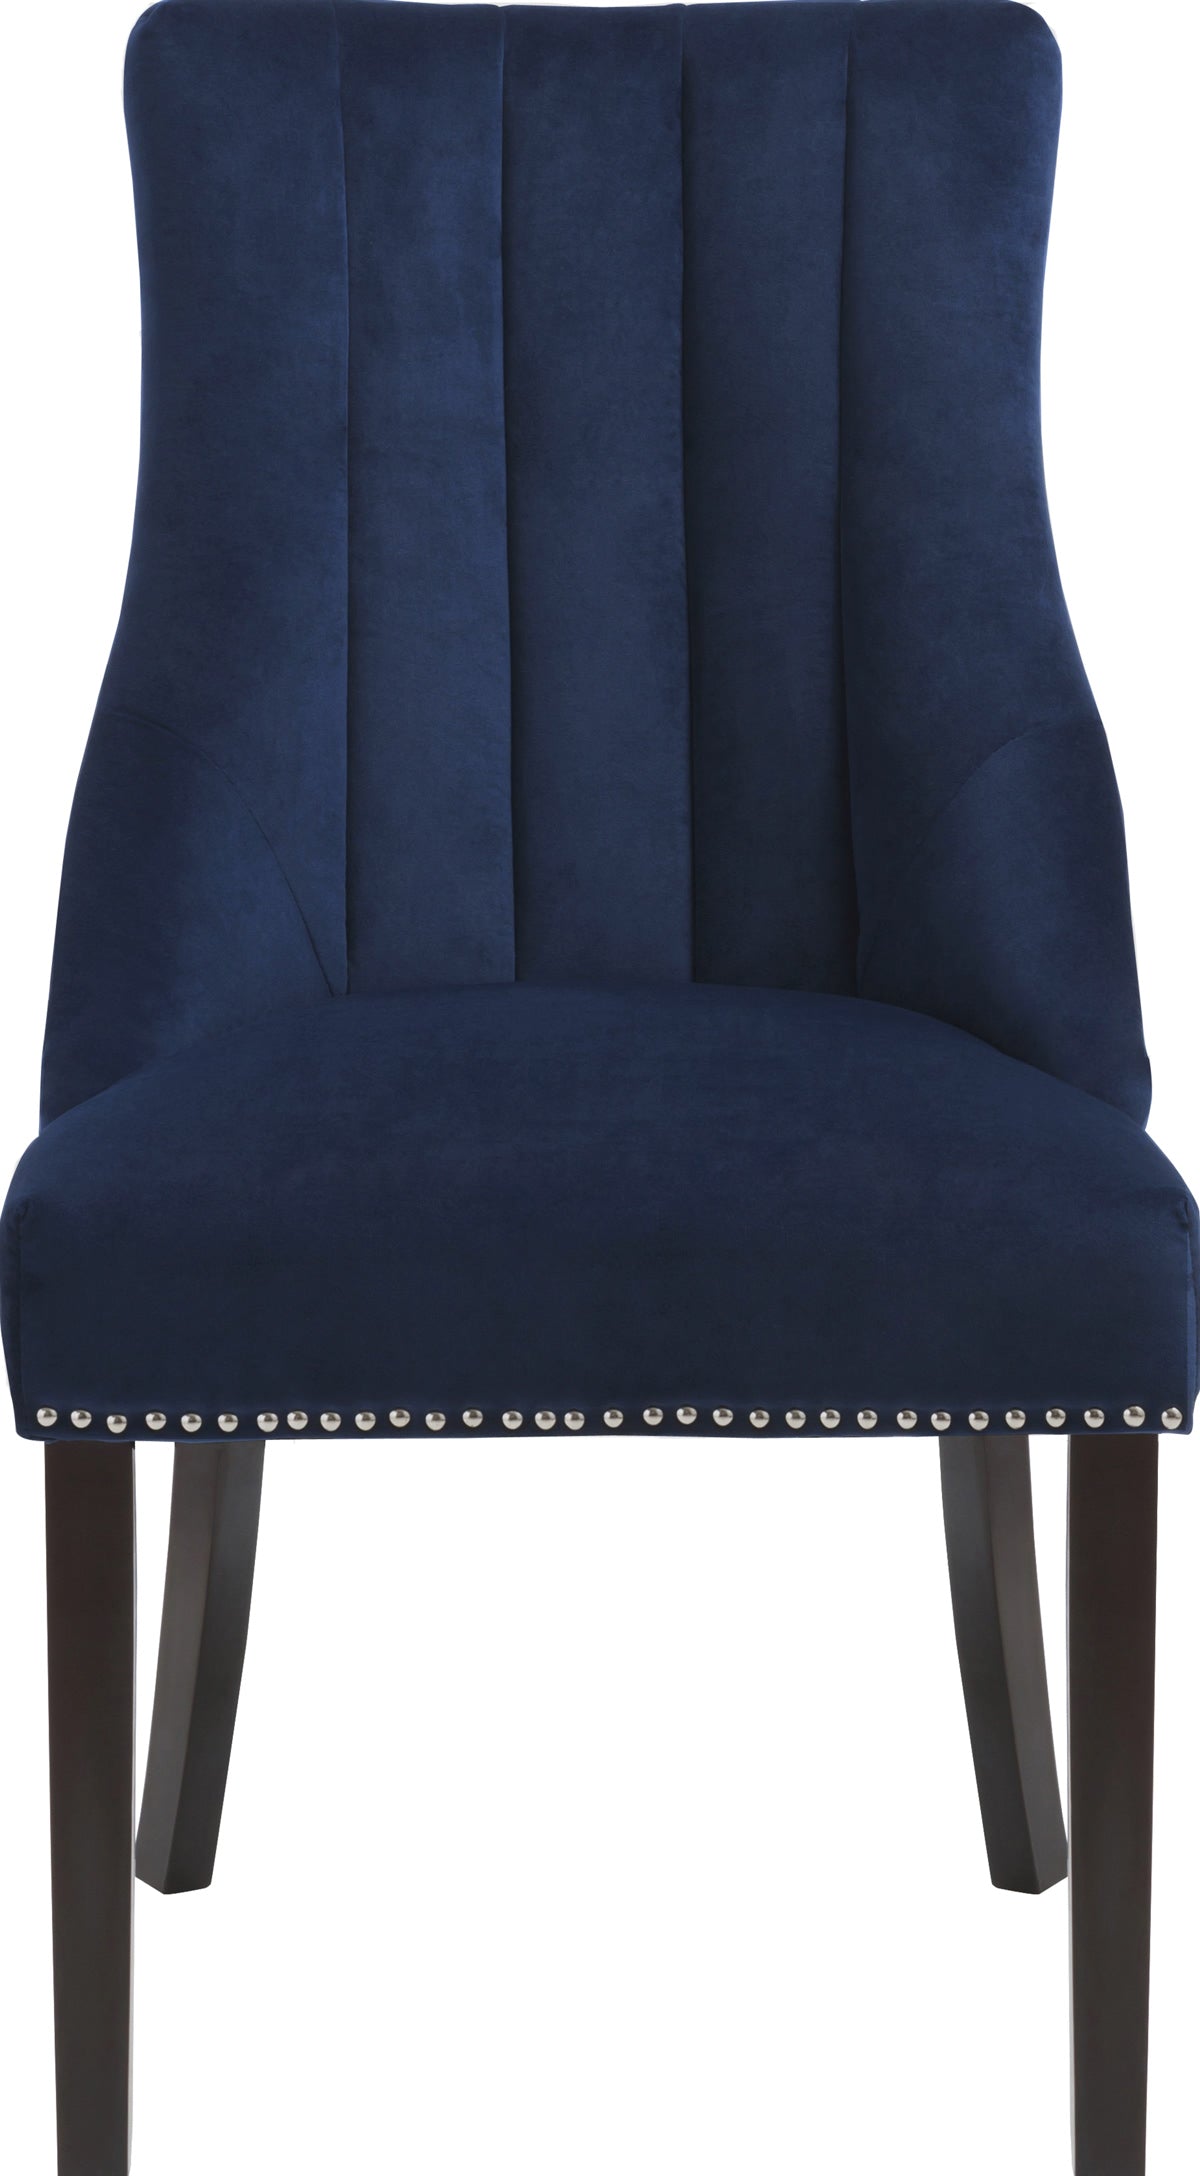 Meridian Furniture Oxford Navy Velvet Dining Chair - Set of 2